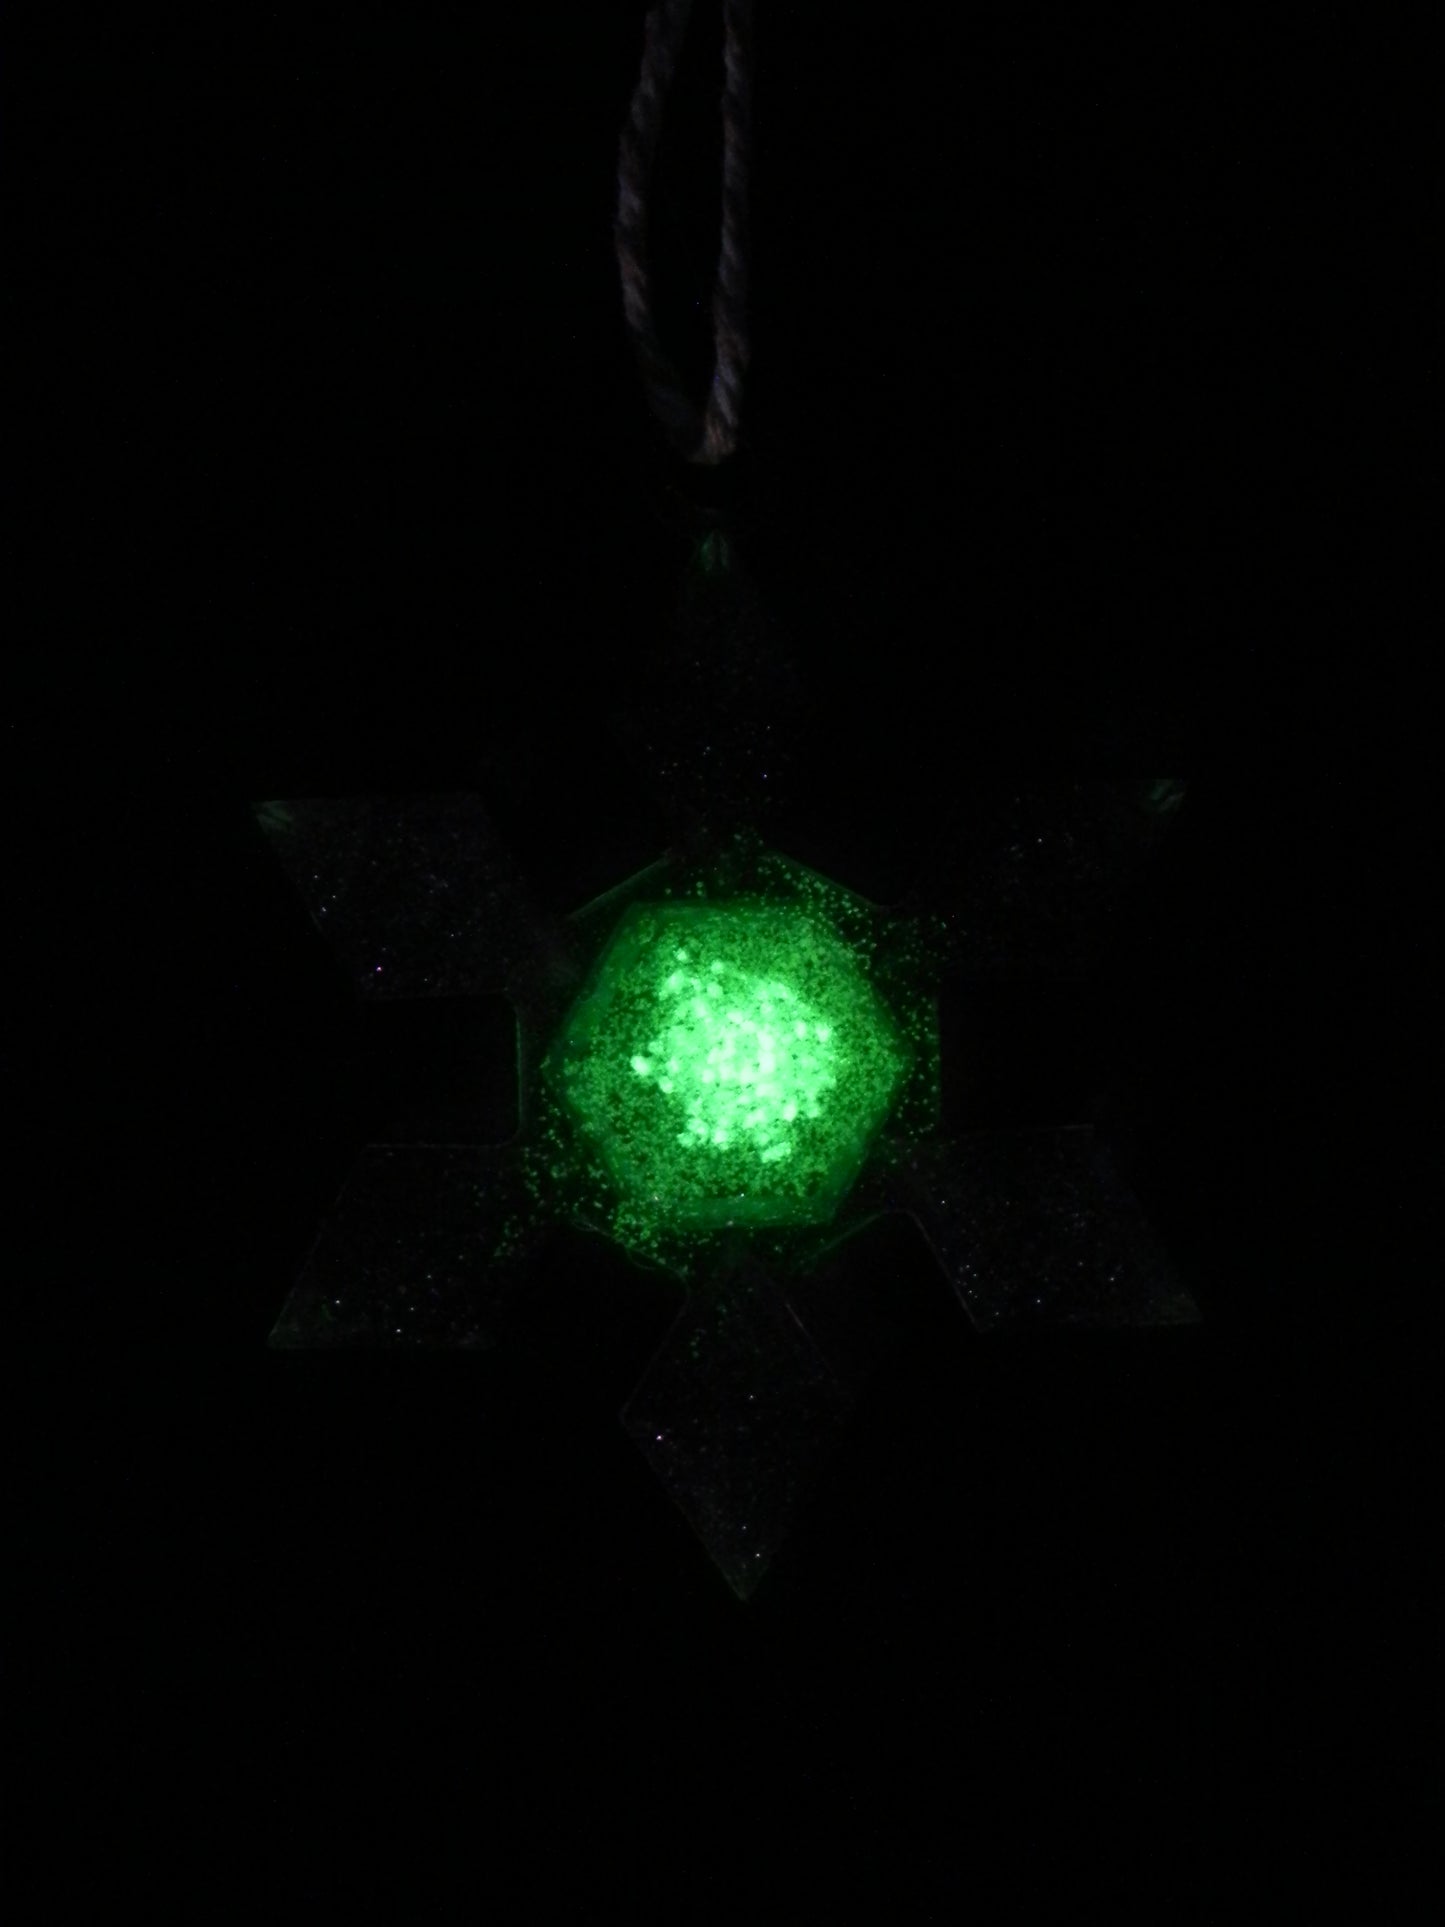 Nuclear Fallout Snowflake Ornament Set